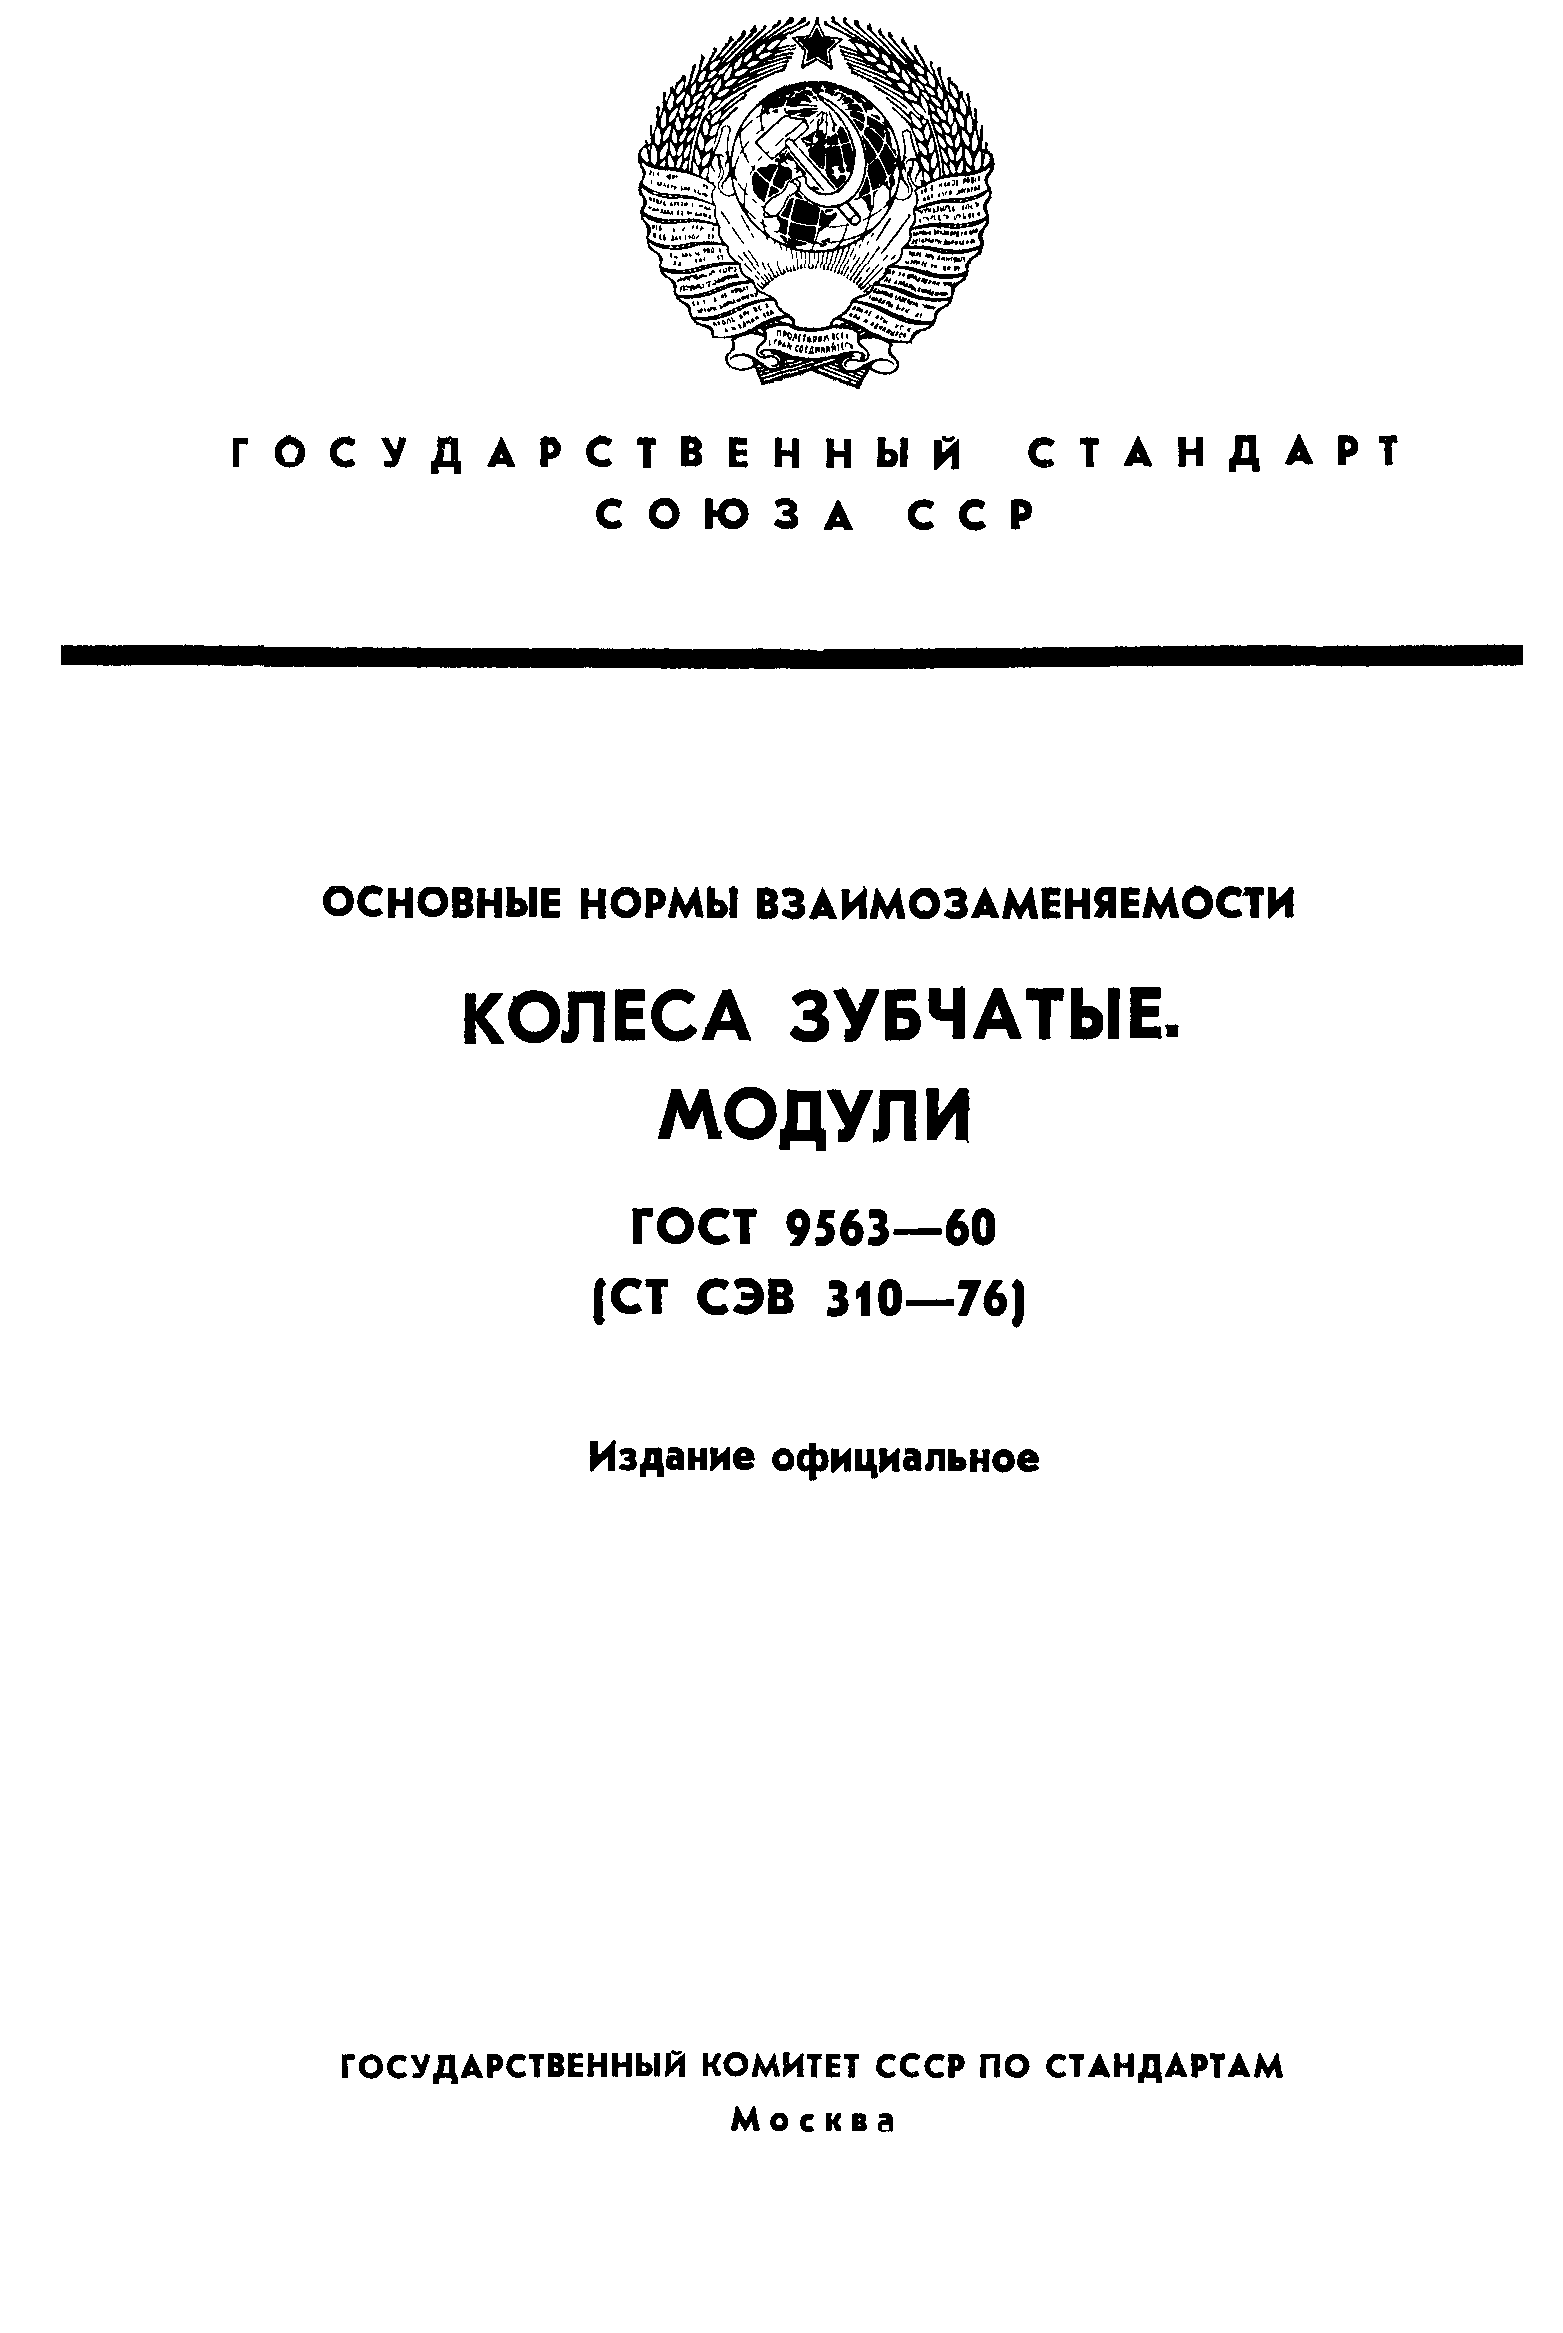 ГОСТ 9563-60